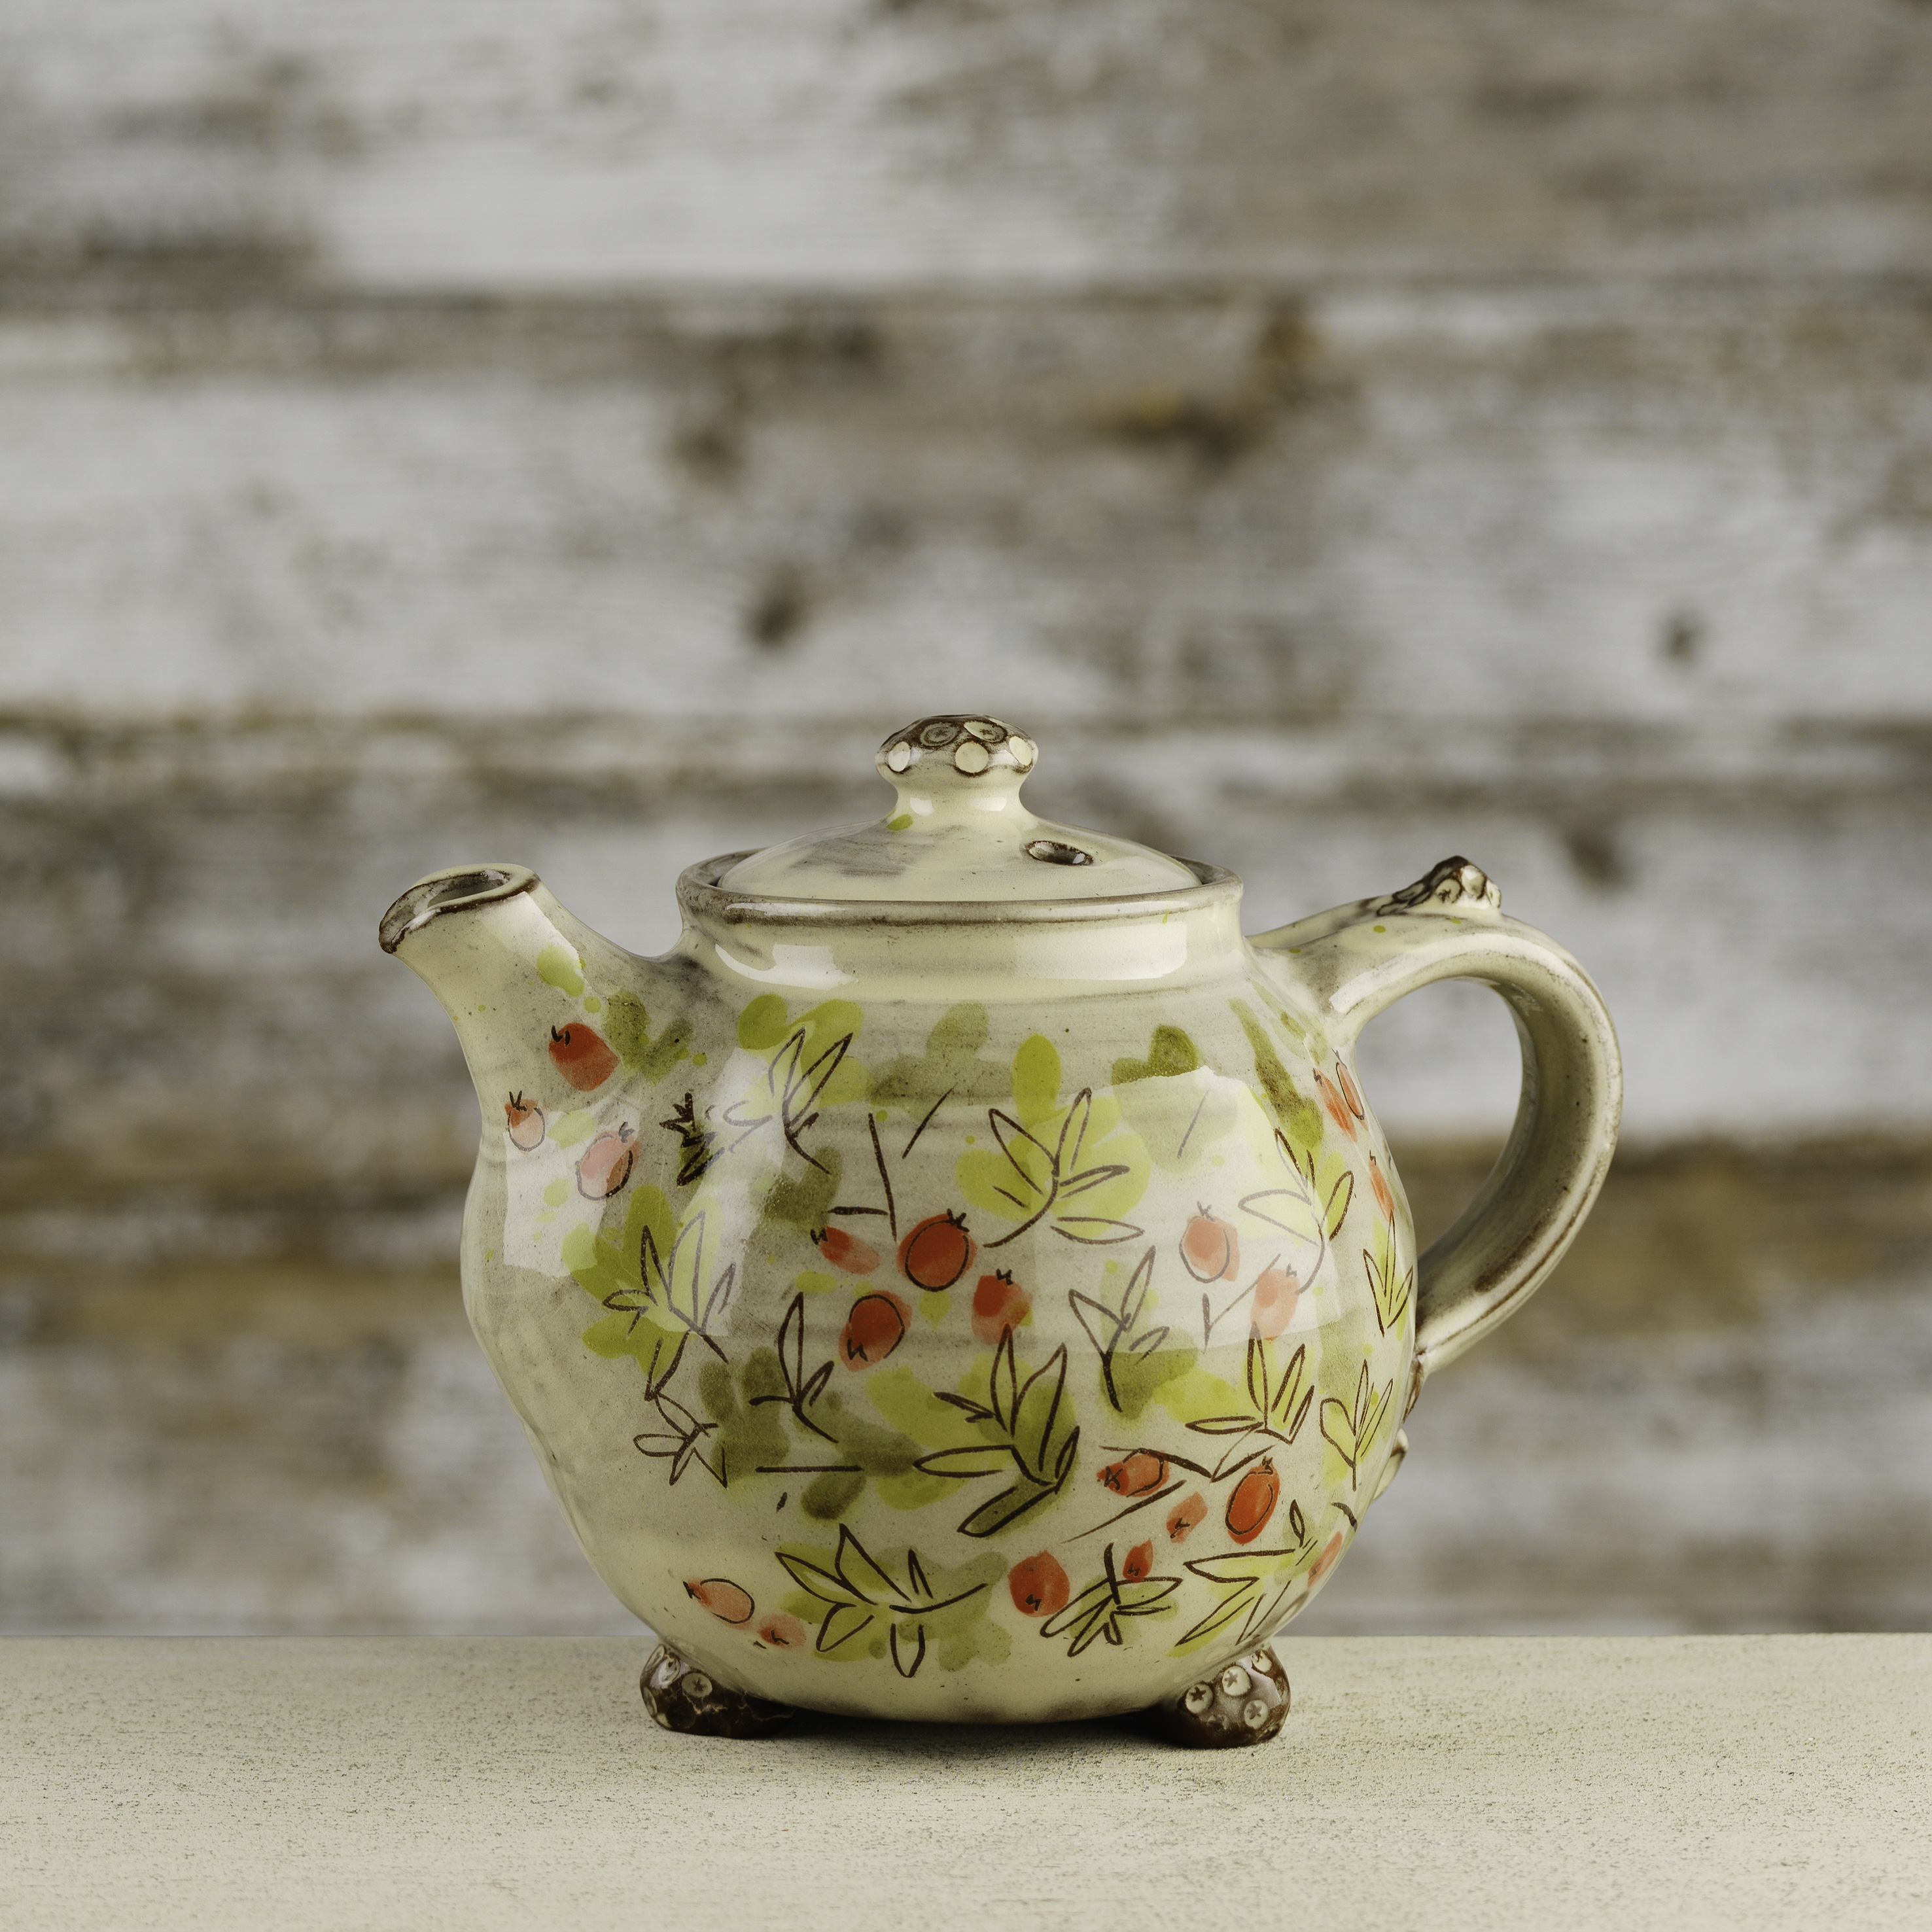 Hawthorn berry teapot